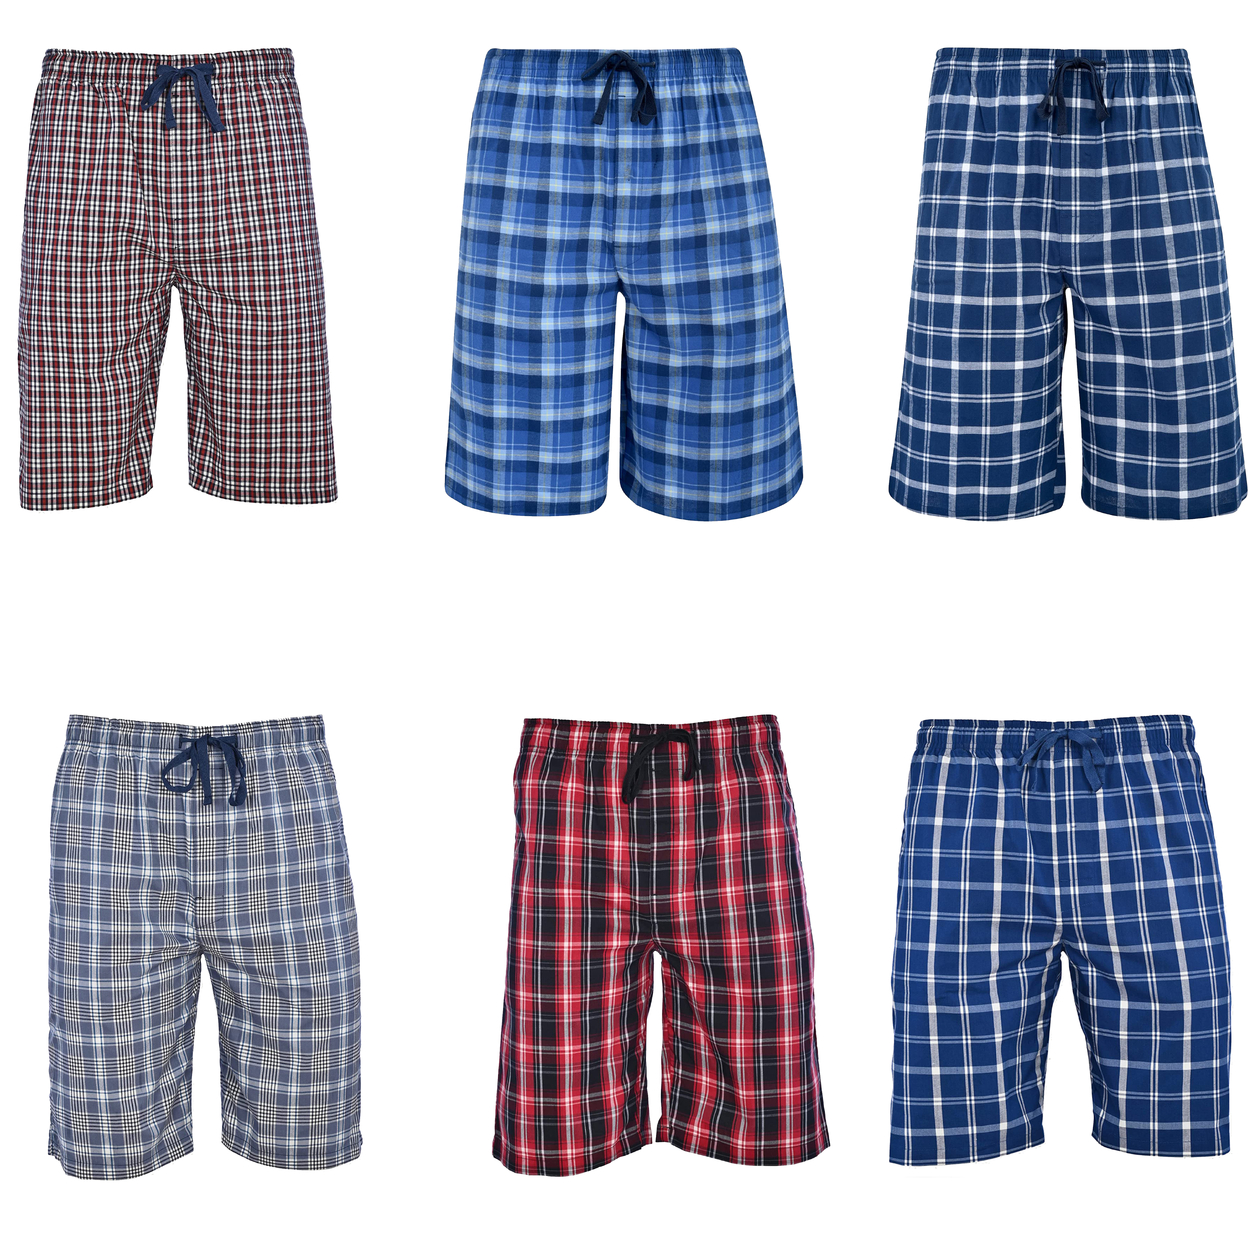 2-Pack: Men's Ultra Soft Plaid Lounge Pajama Sleep Wear Shorts - Red & Blue, Small